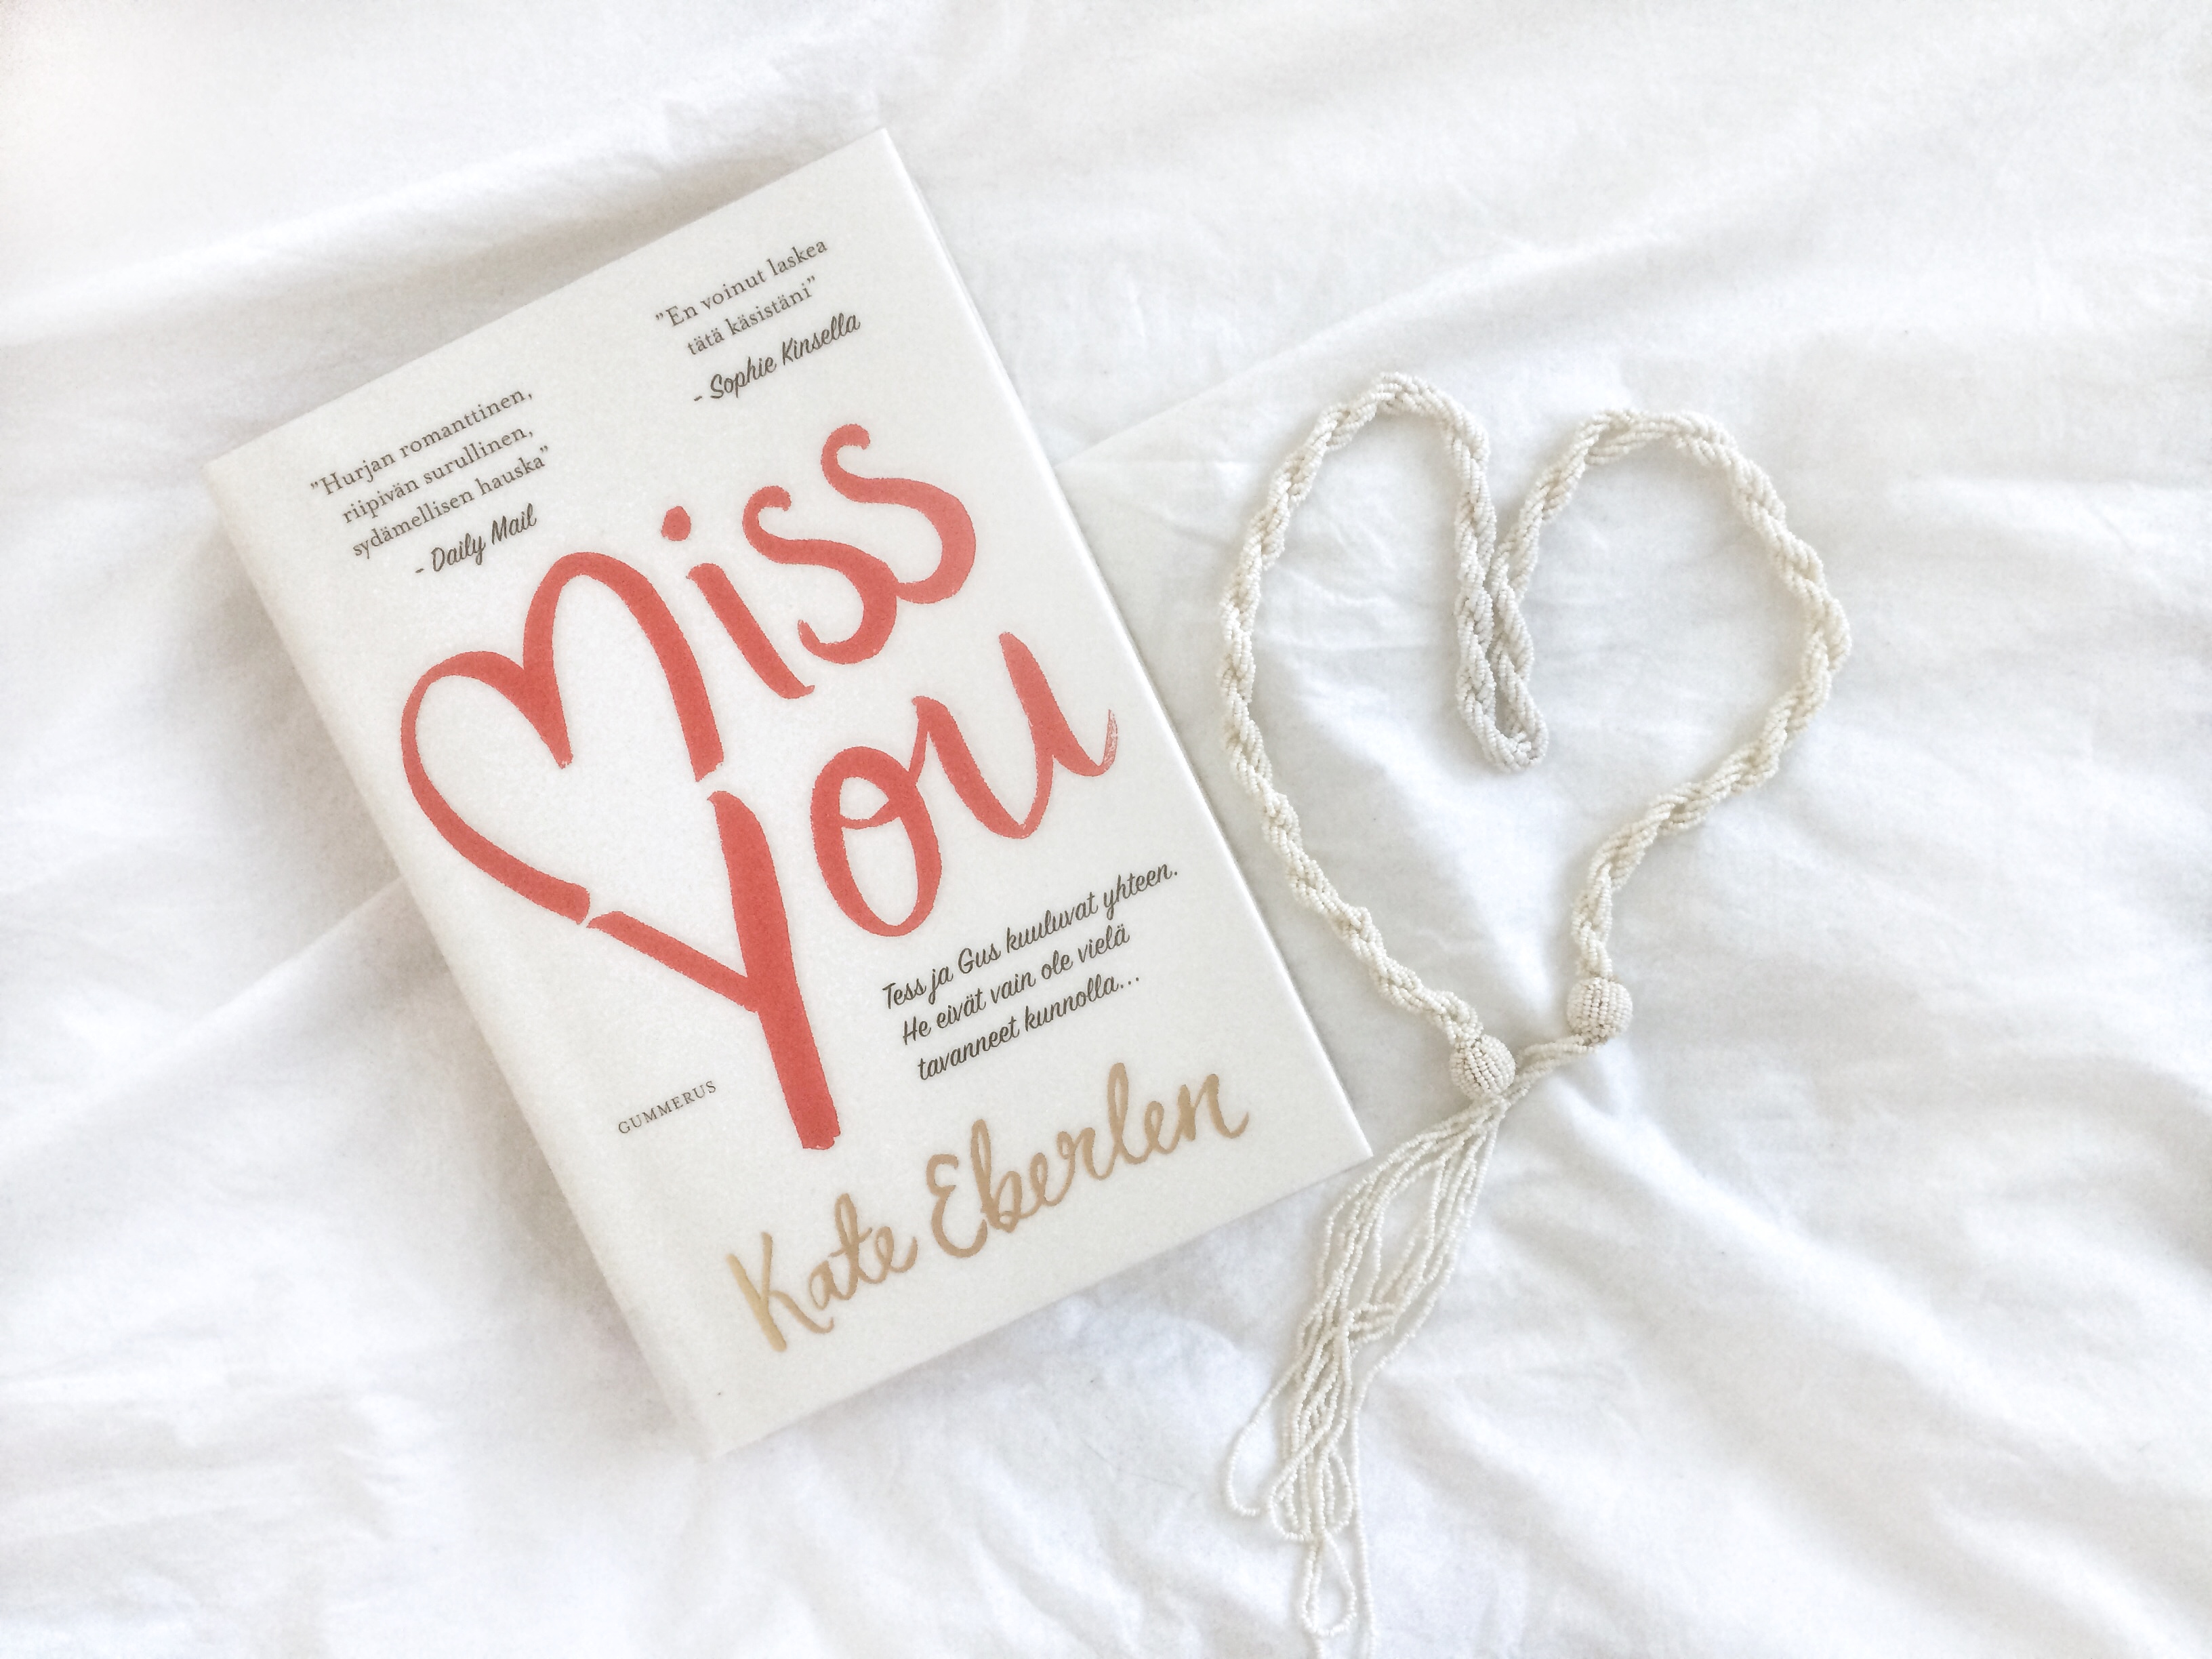 Miss You - Kate Eberlen